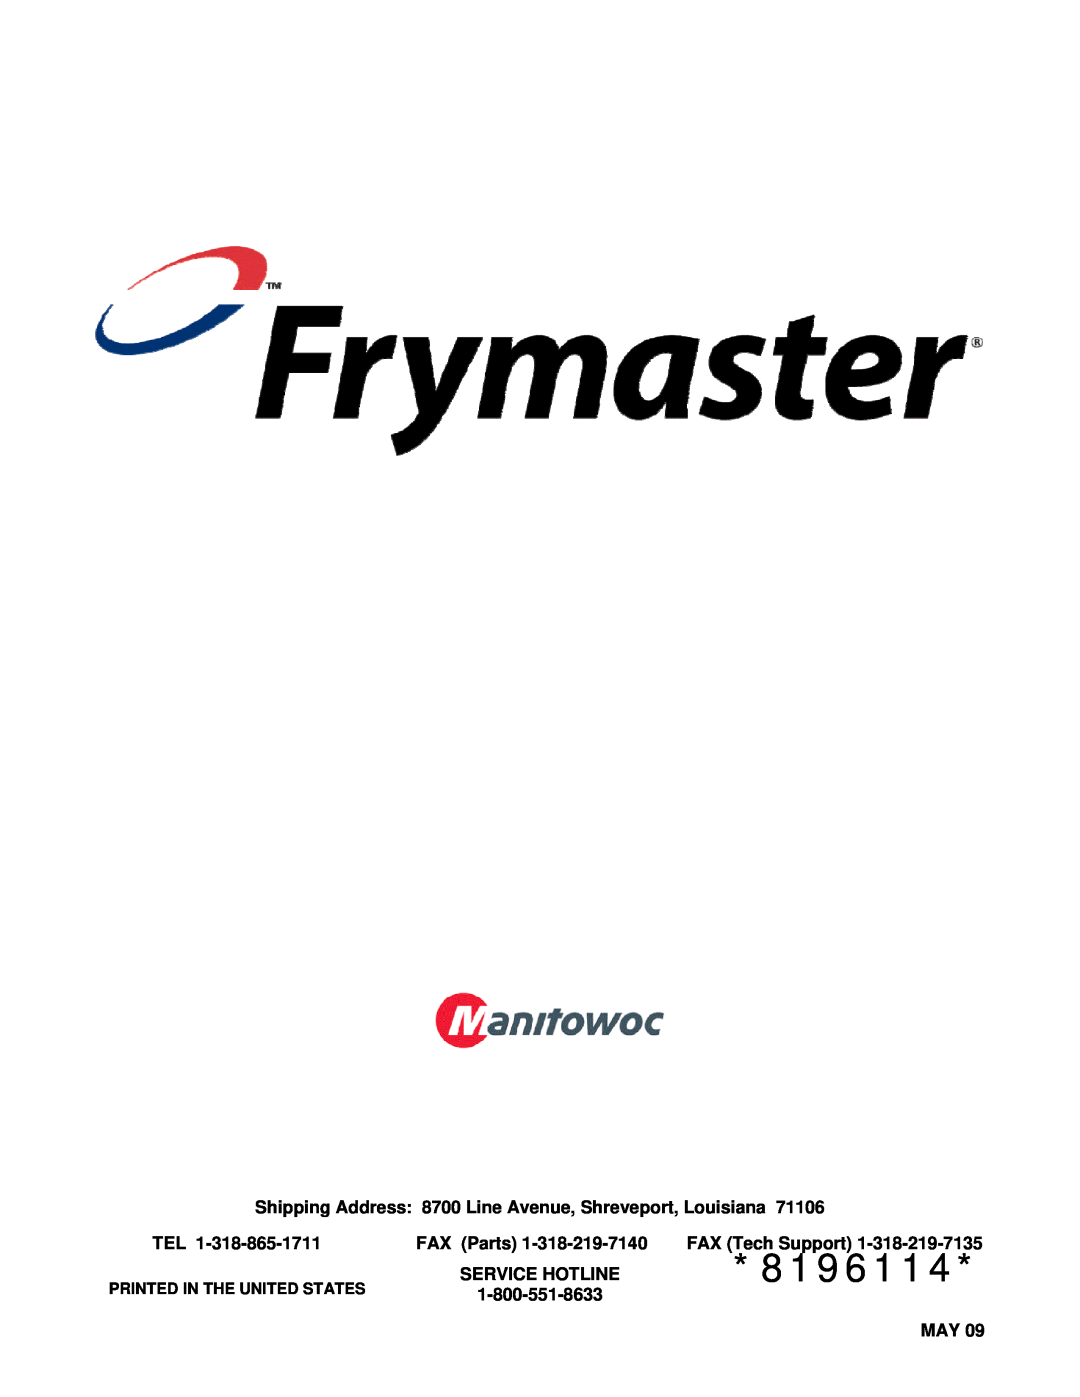 Frymaster 2836 manual 8196114, Shipping Address 8700 Line Avenue, Shreveport, Louisiana, FAX Parts, FAX Tech Support 